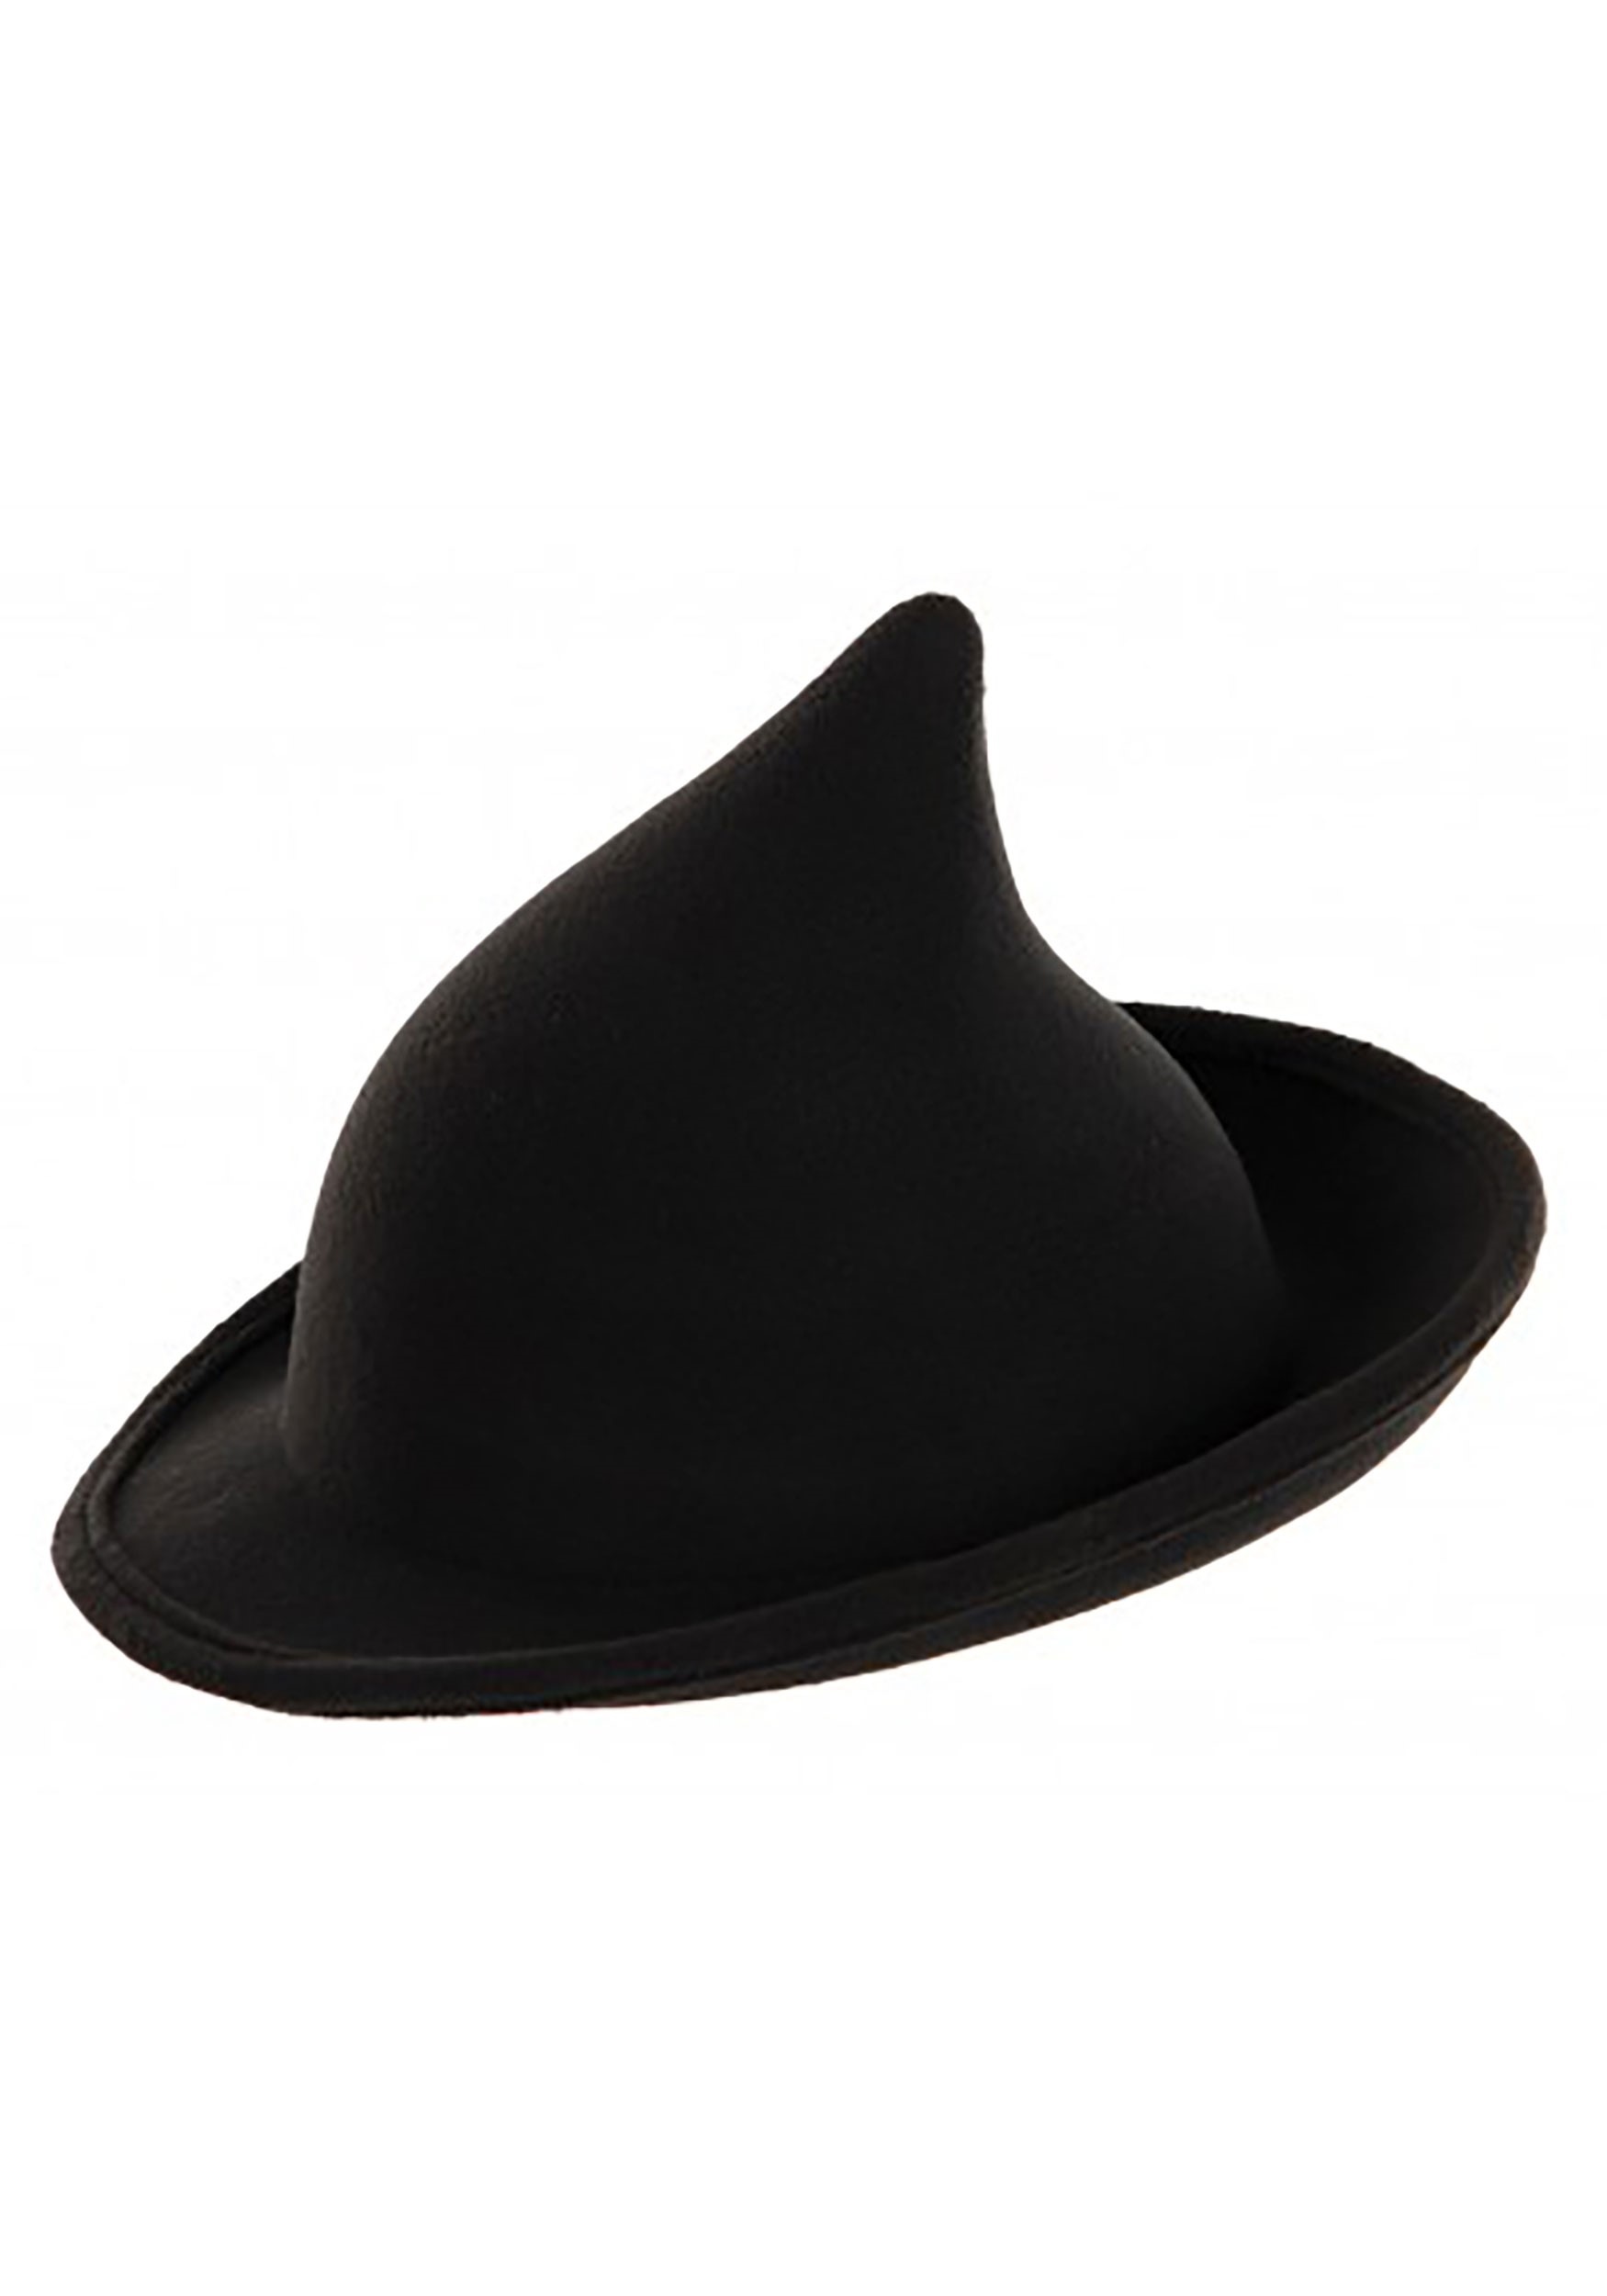 Black Witch Costume Hat Modern